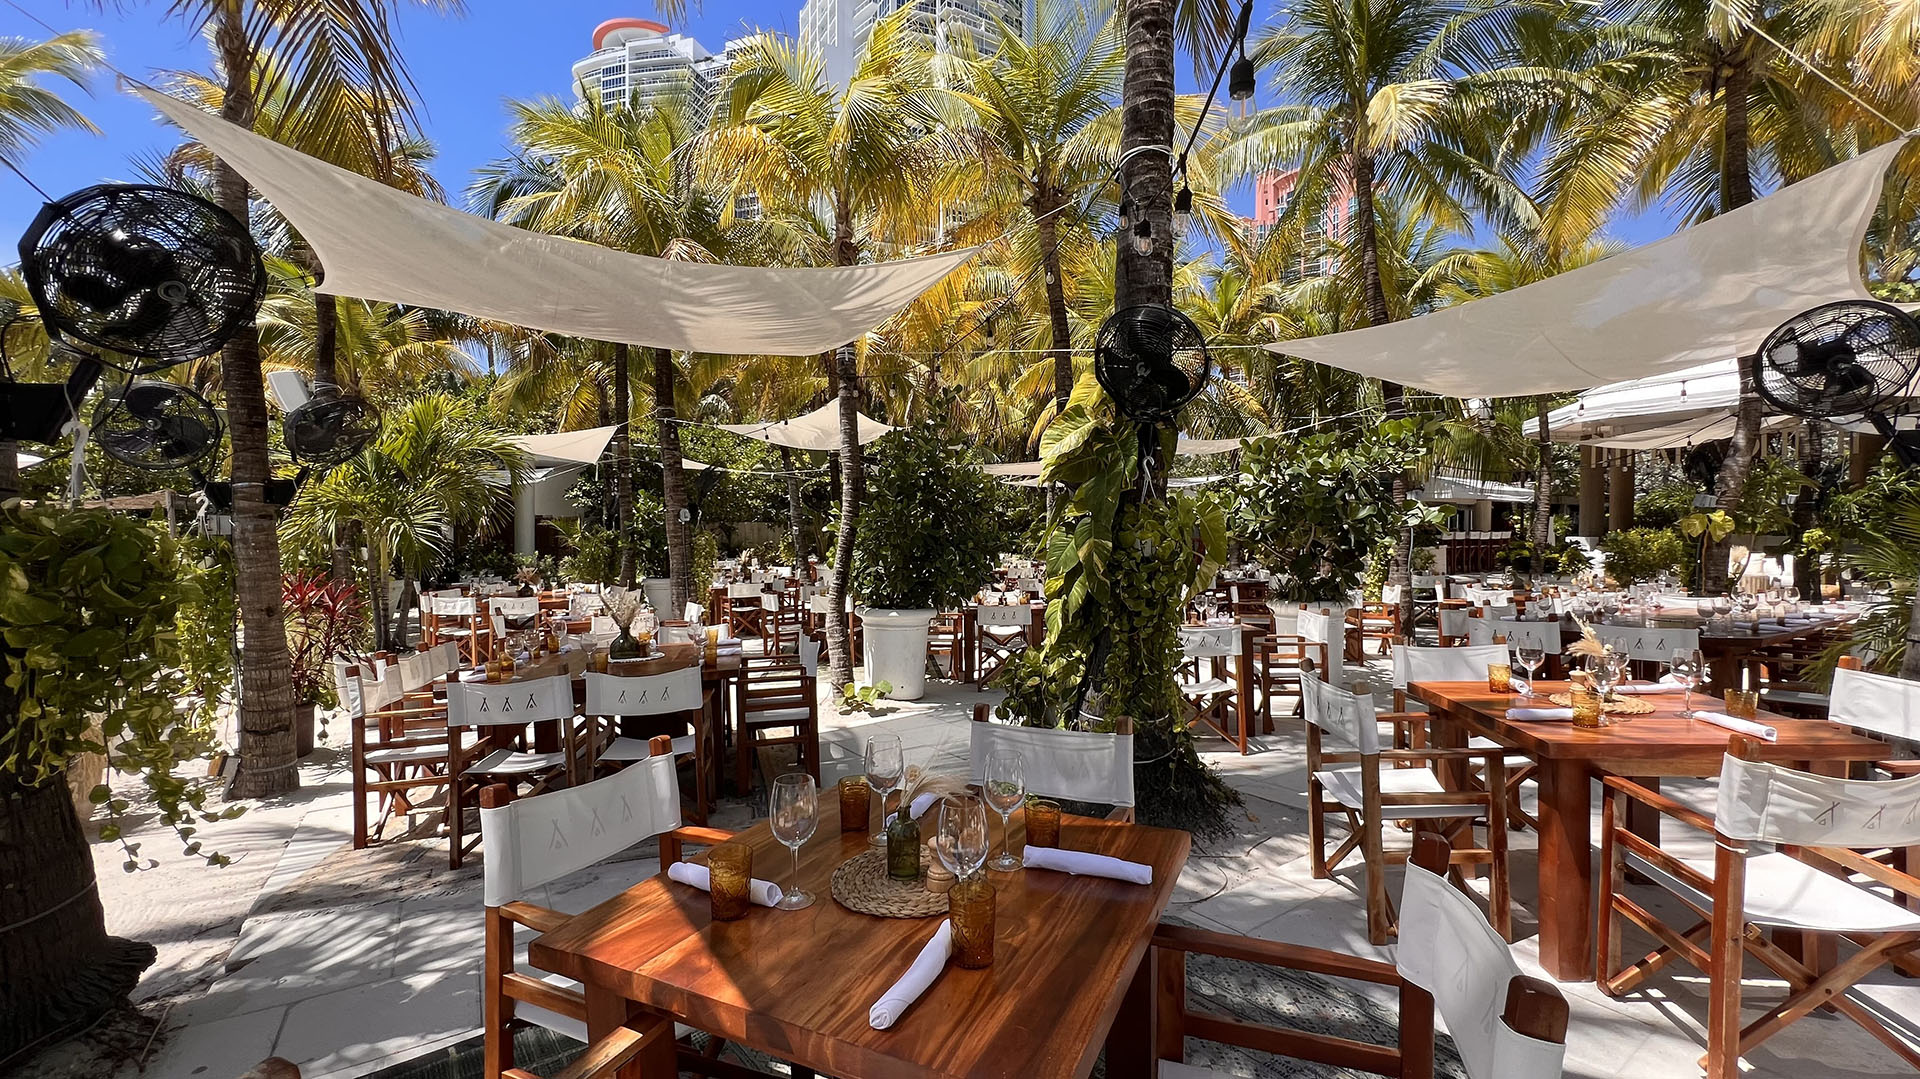 Nikki Beach: el emblemático santuario para celebridades en Miami Beach.
